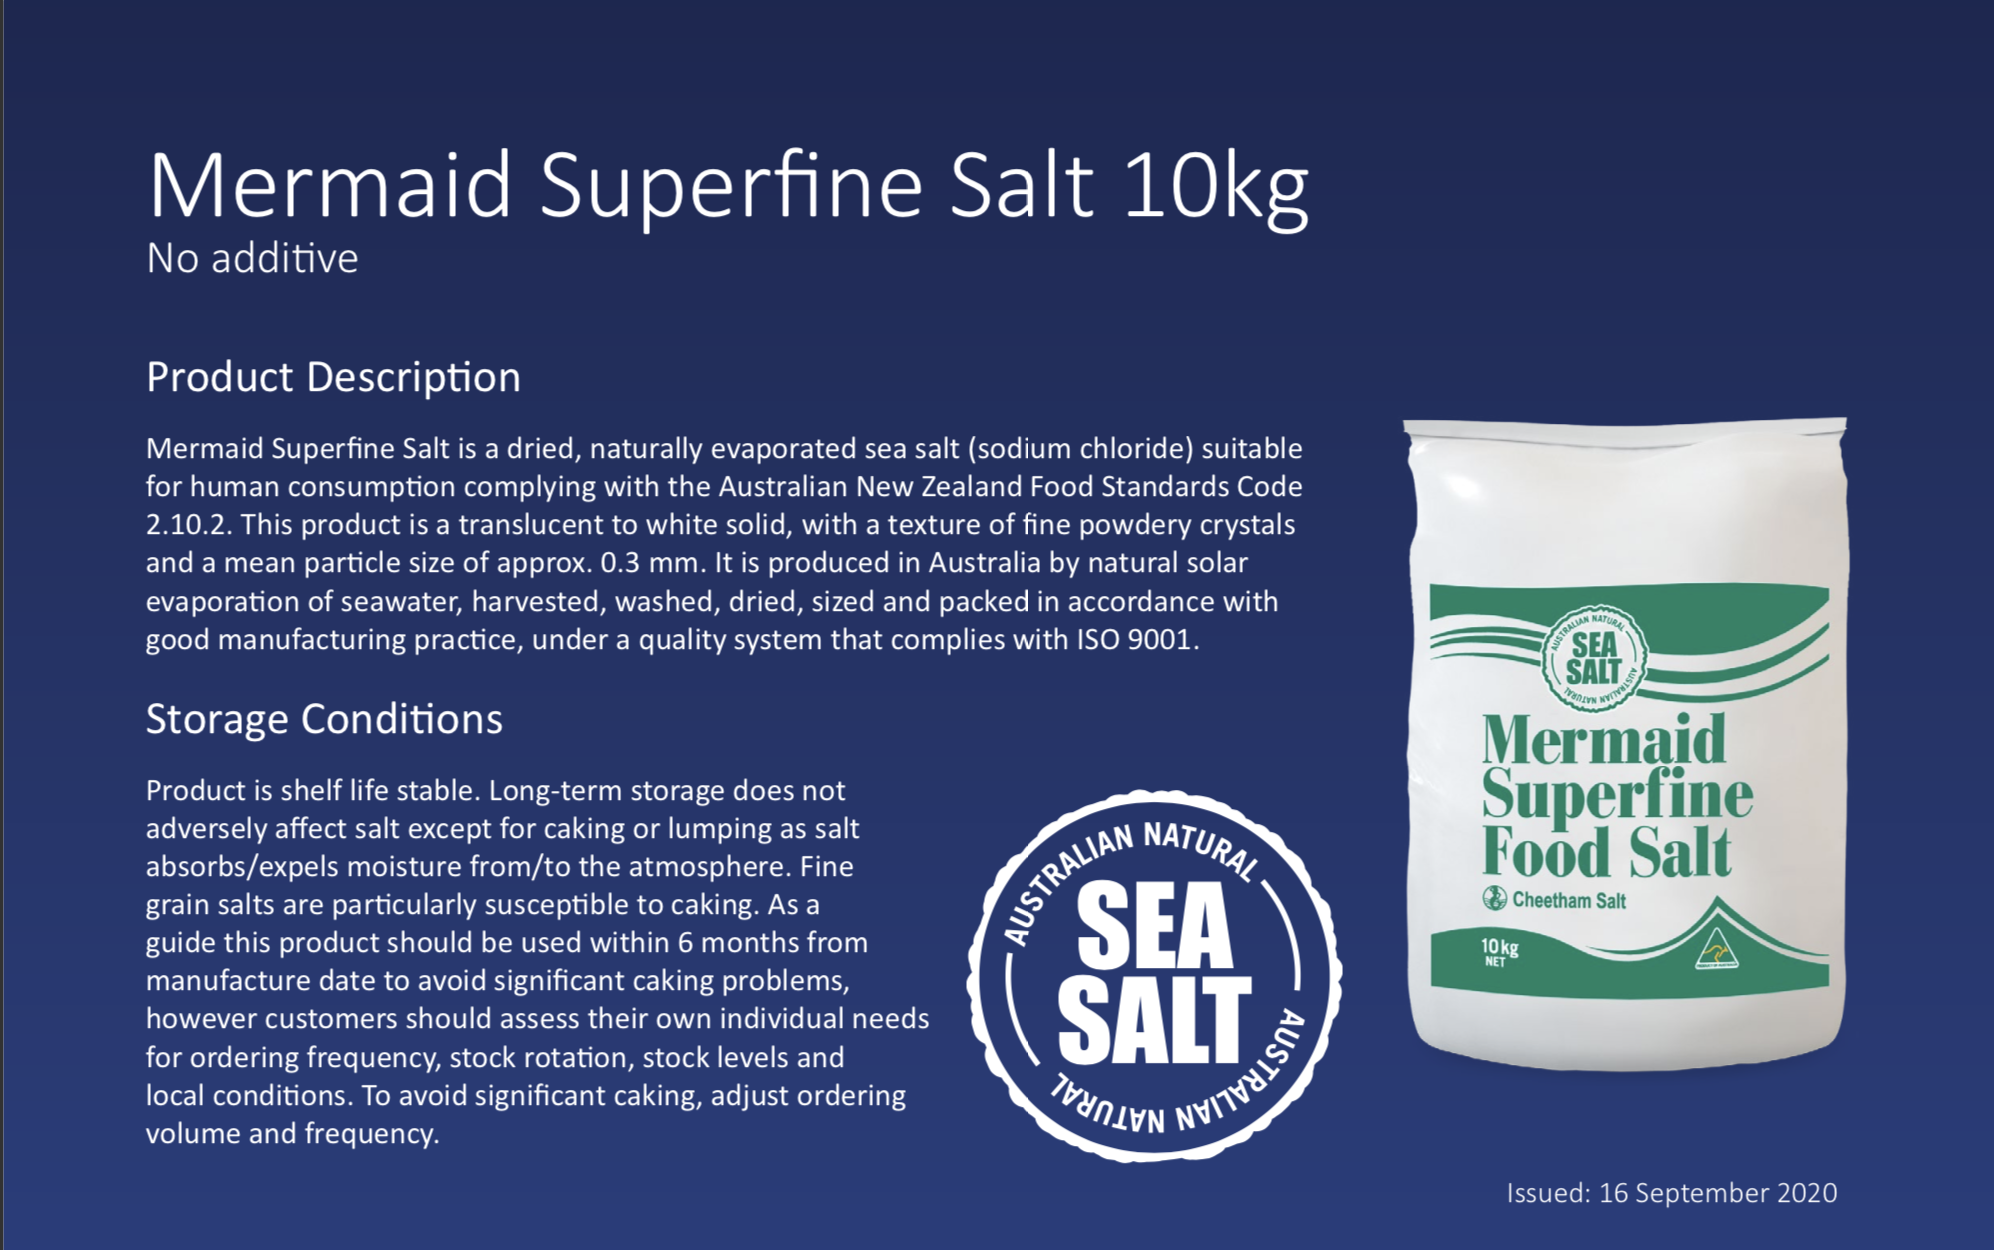 Mermaid Superfine Salt 10kg product description. The product description includes details about the food grade salt as well as storage information.